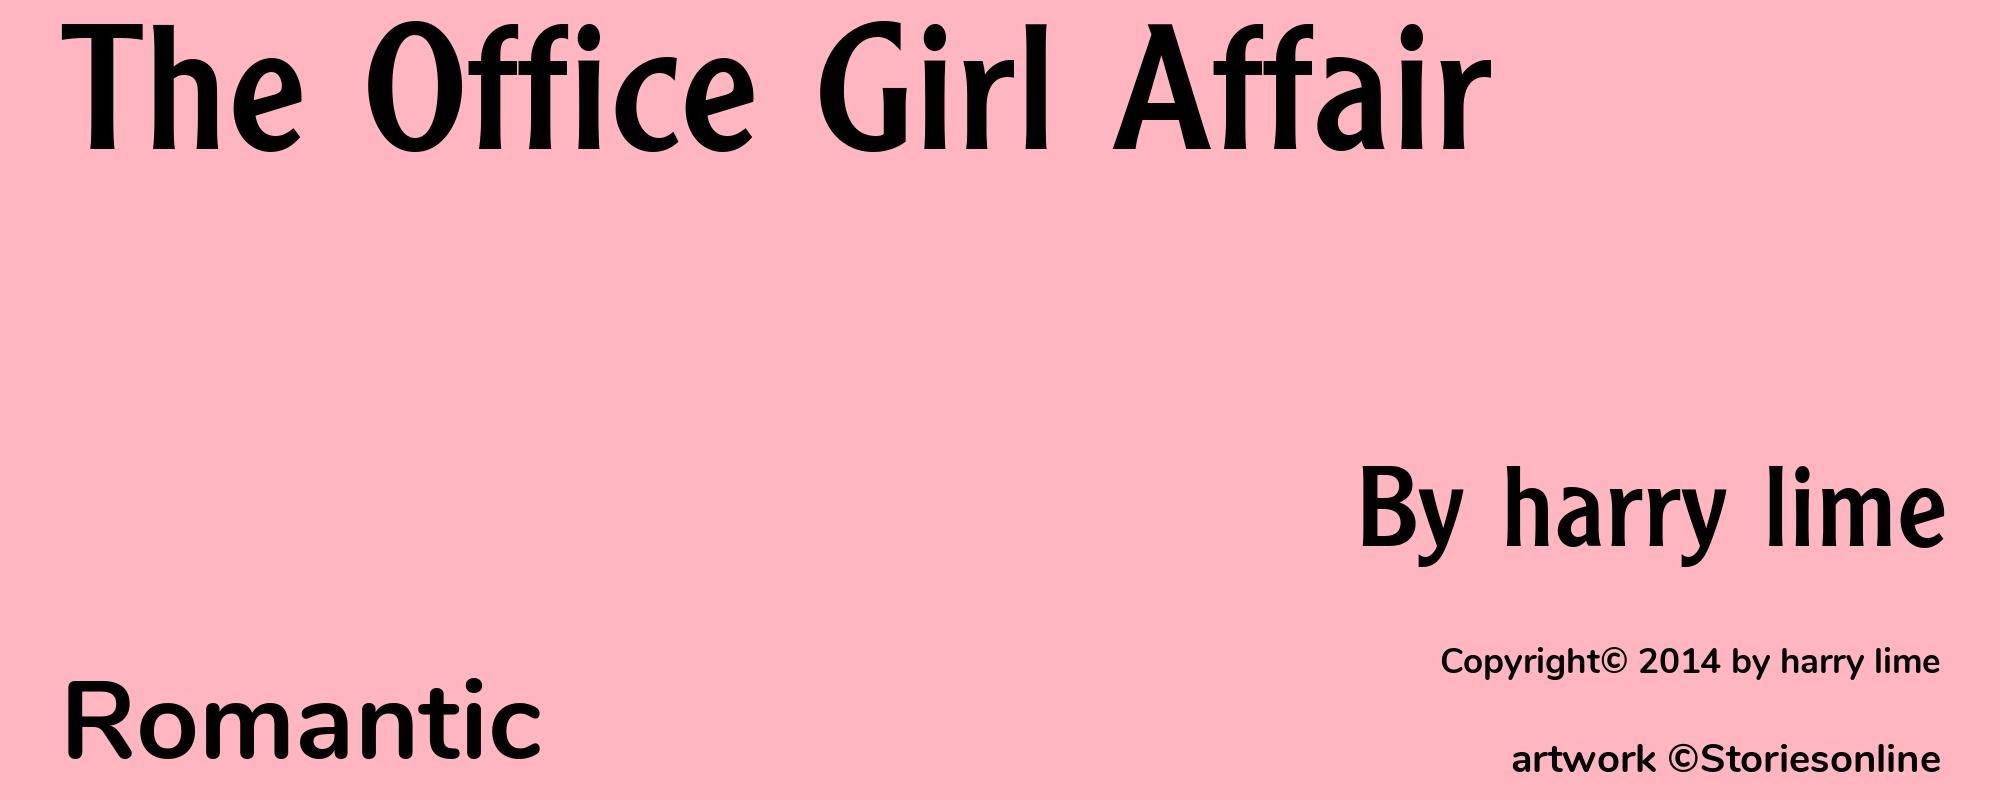 The Office Girl Affair - Cover